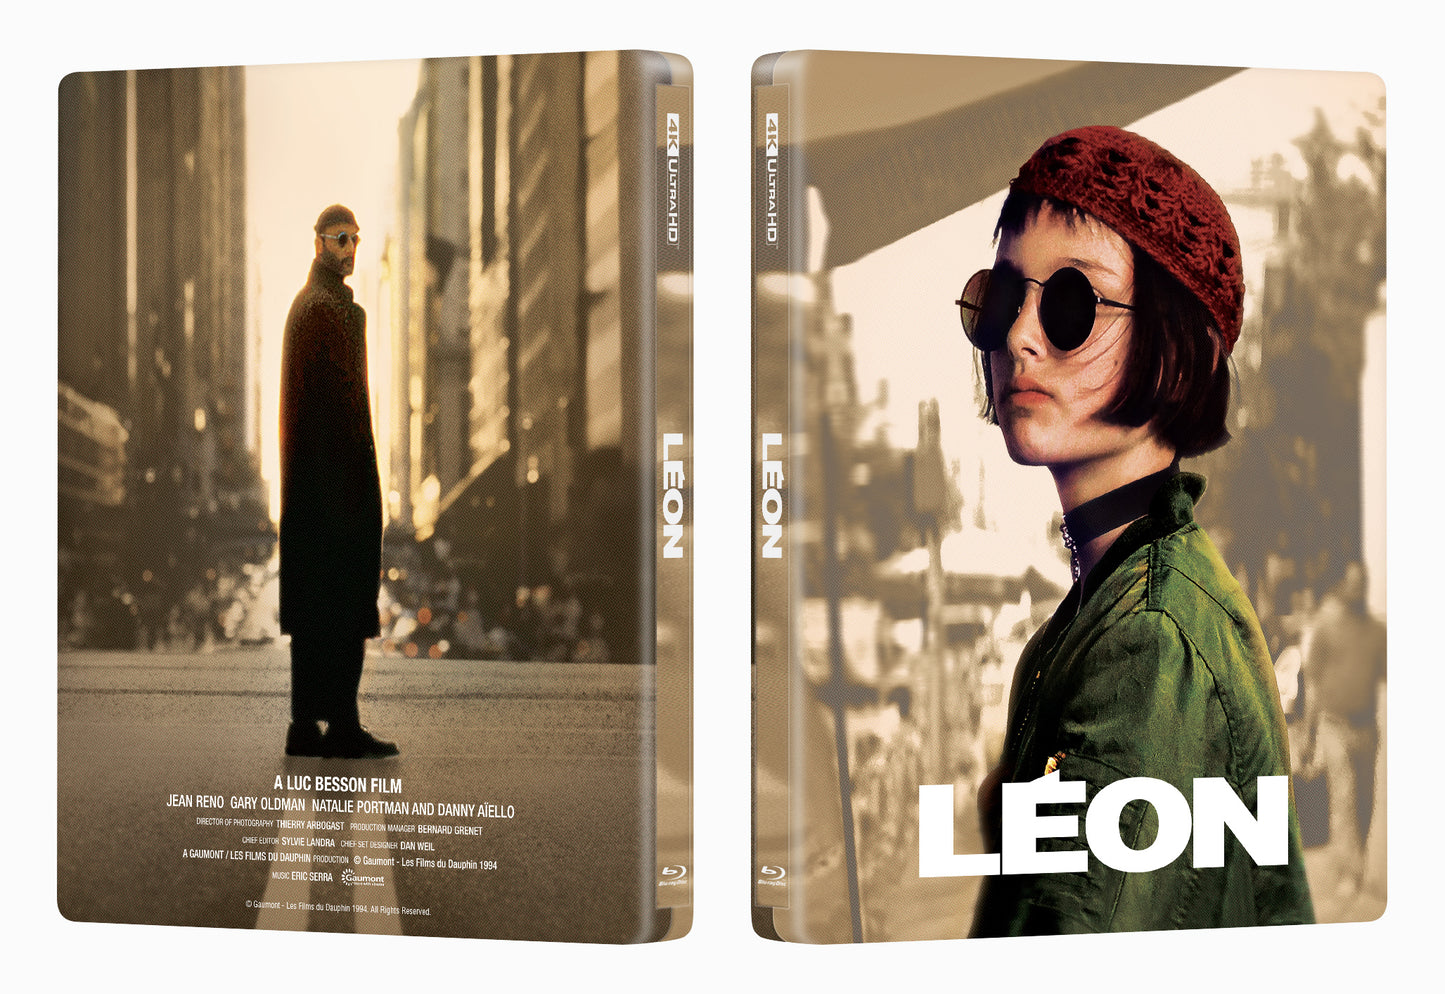 Leon 4K Blu-ray Steelbook Manta Lab Exclusive ME#57 HDN GB Pre-Order Double Lenticular Slip